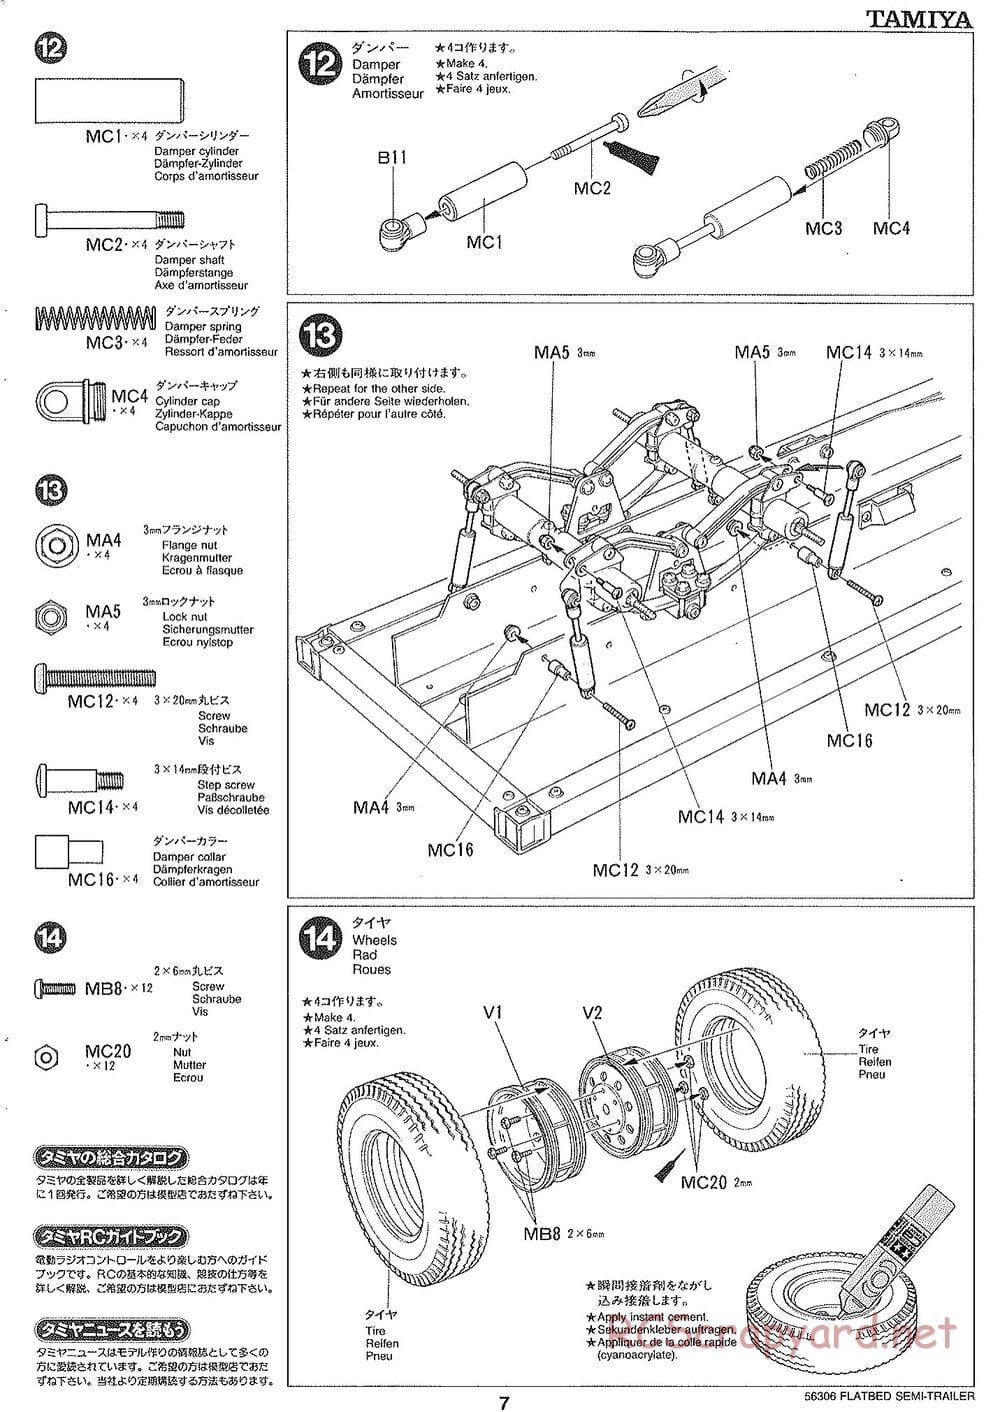 Tamiya - Semi Flatbed Trailer Chassis - Manual - Page 7